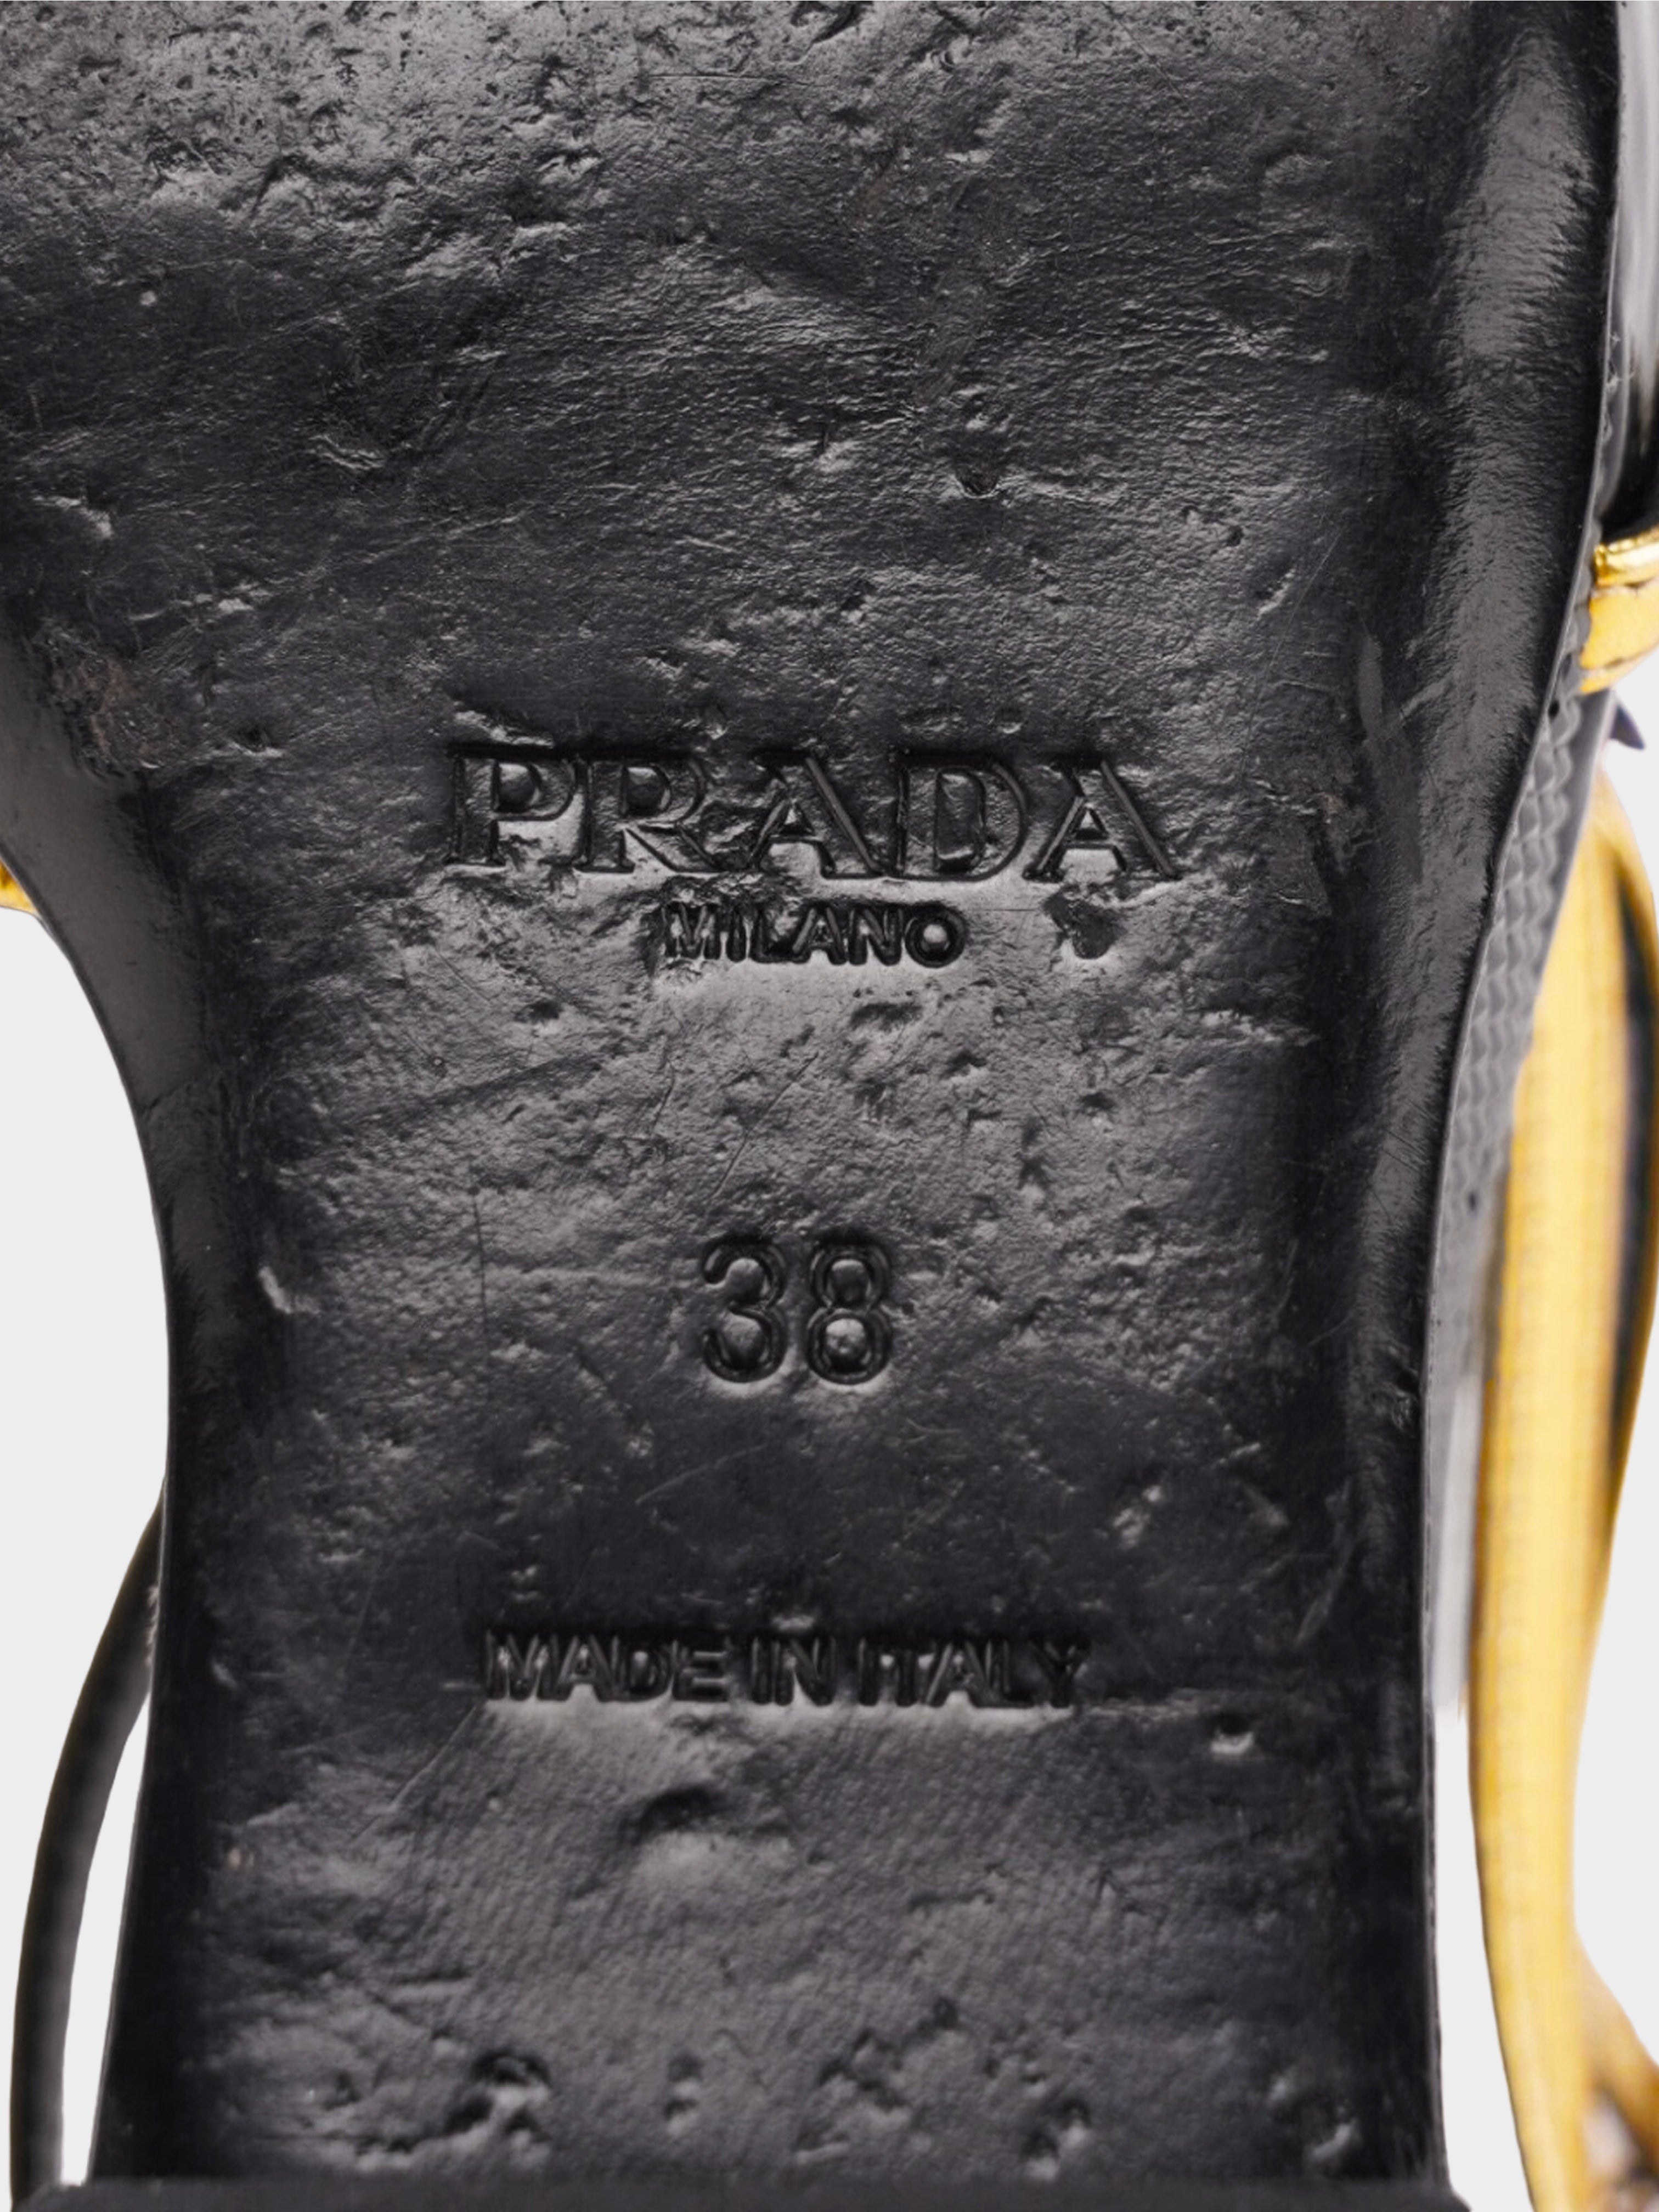 Prada FW 2014 Metallic Leather Perforated Runway Wedge Sandals